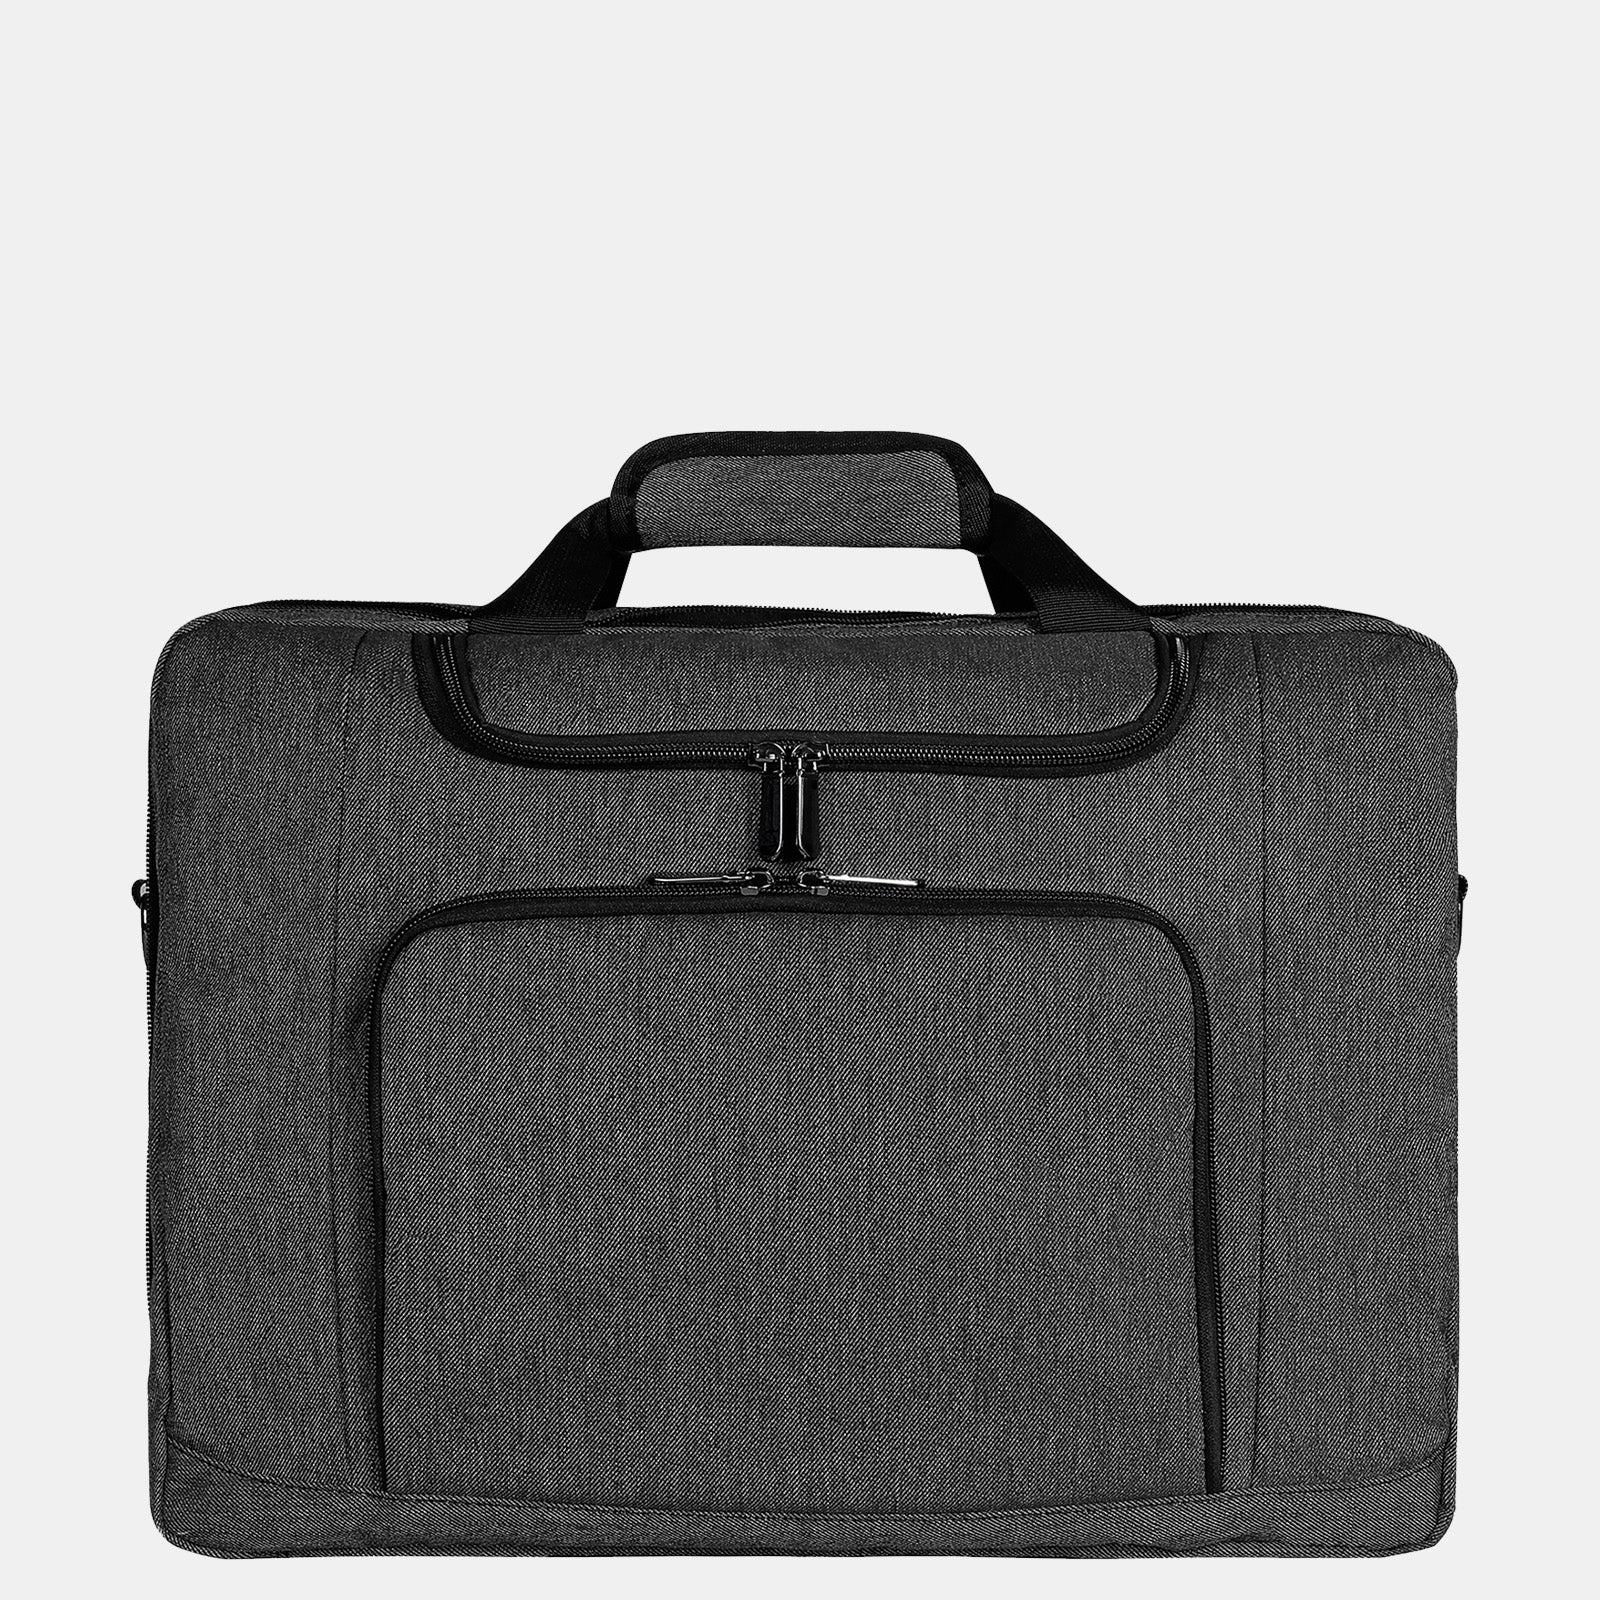 Bertasche Laptop Shoulder Bag for University/Work